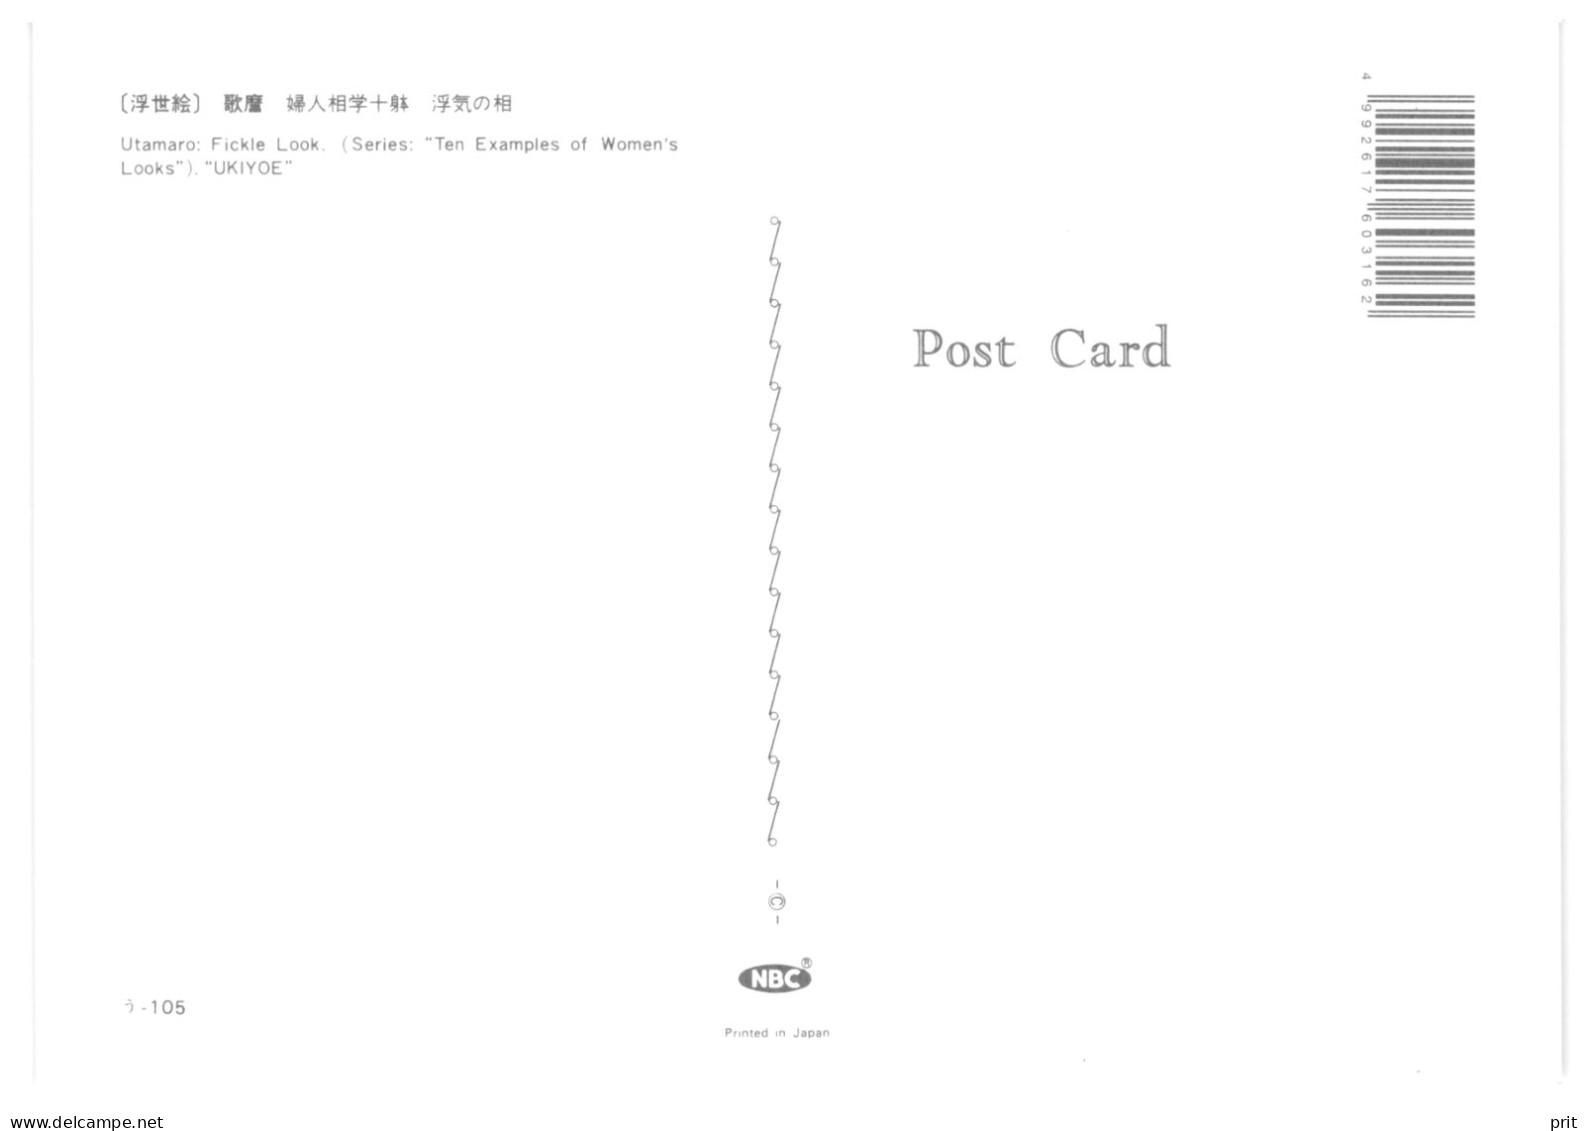 Utamaro Fickle Look, UKIYOE, Ten Examples Of Women's Looks. Unused Postcard. Publisher NBC, Japan - Pintura & Cuadros